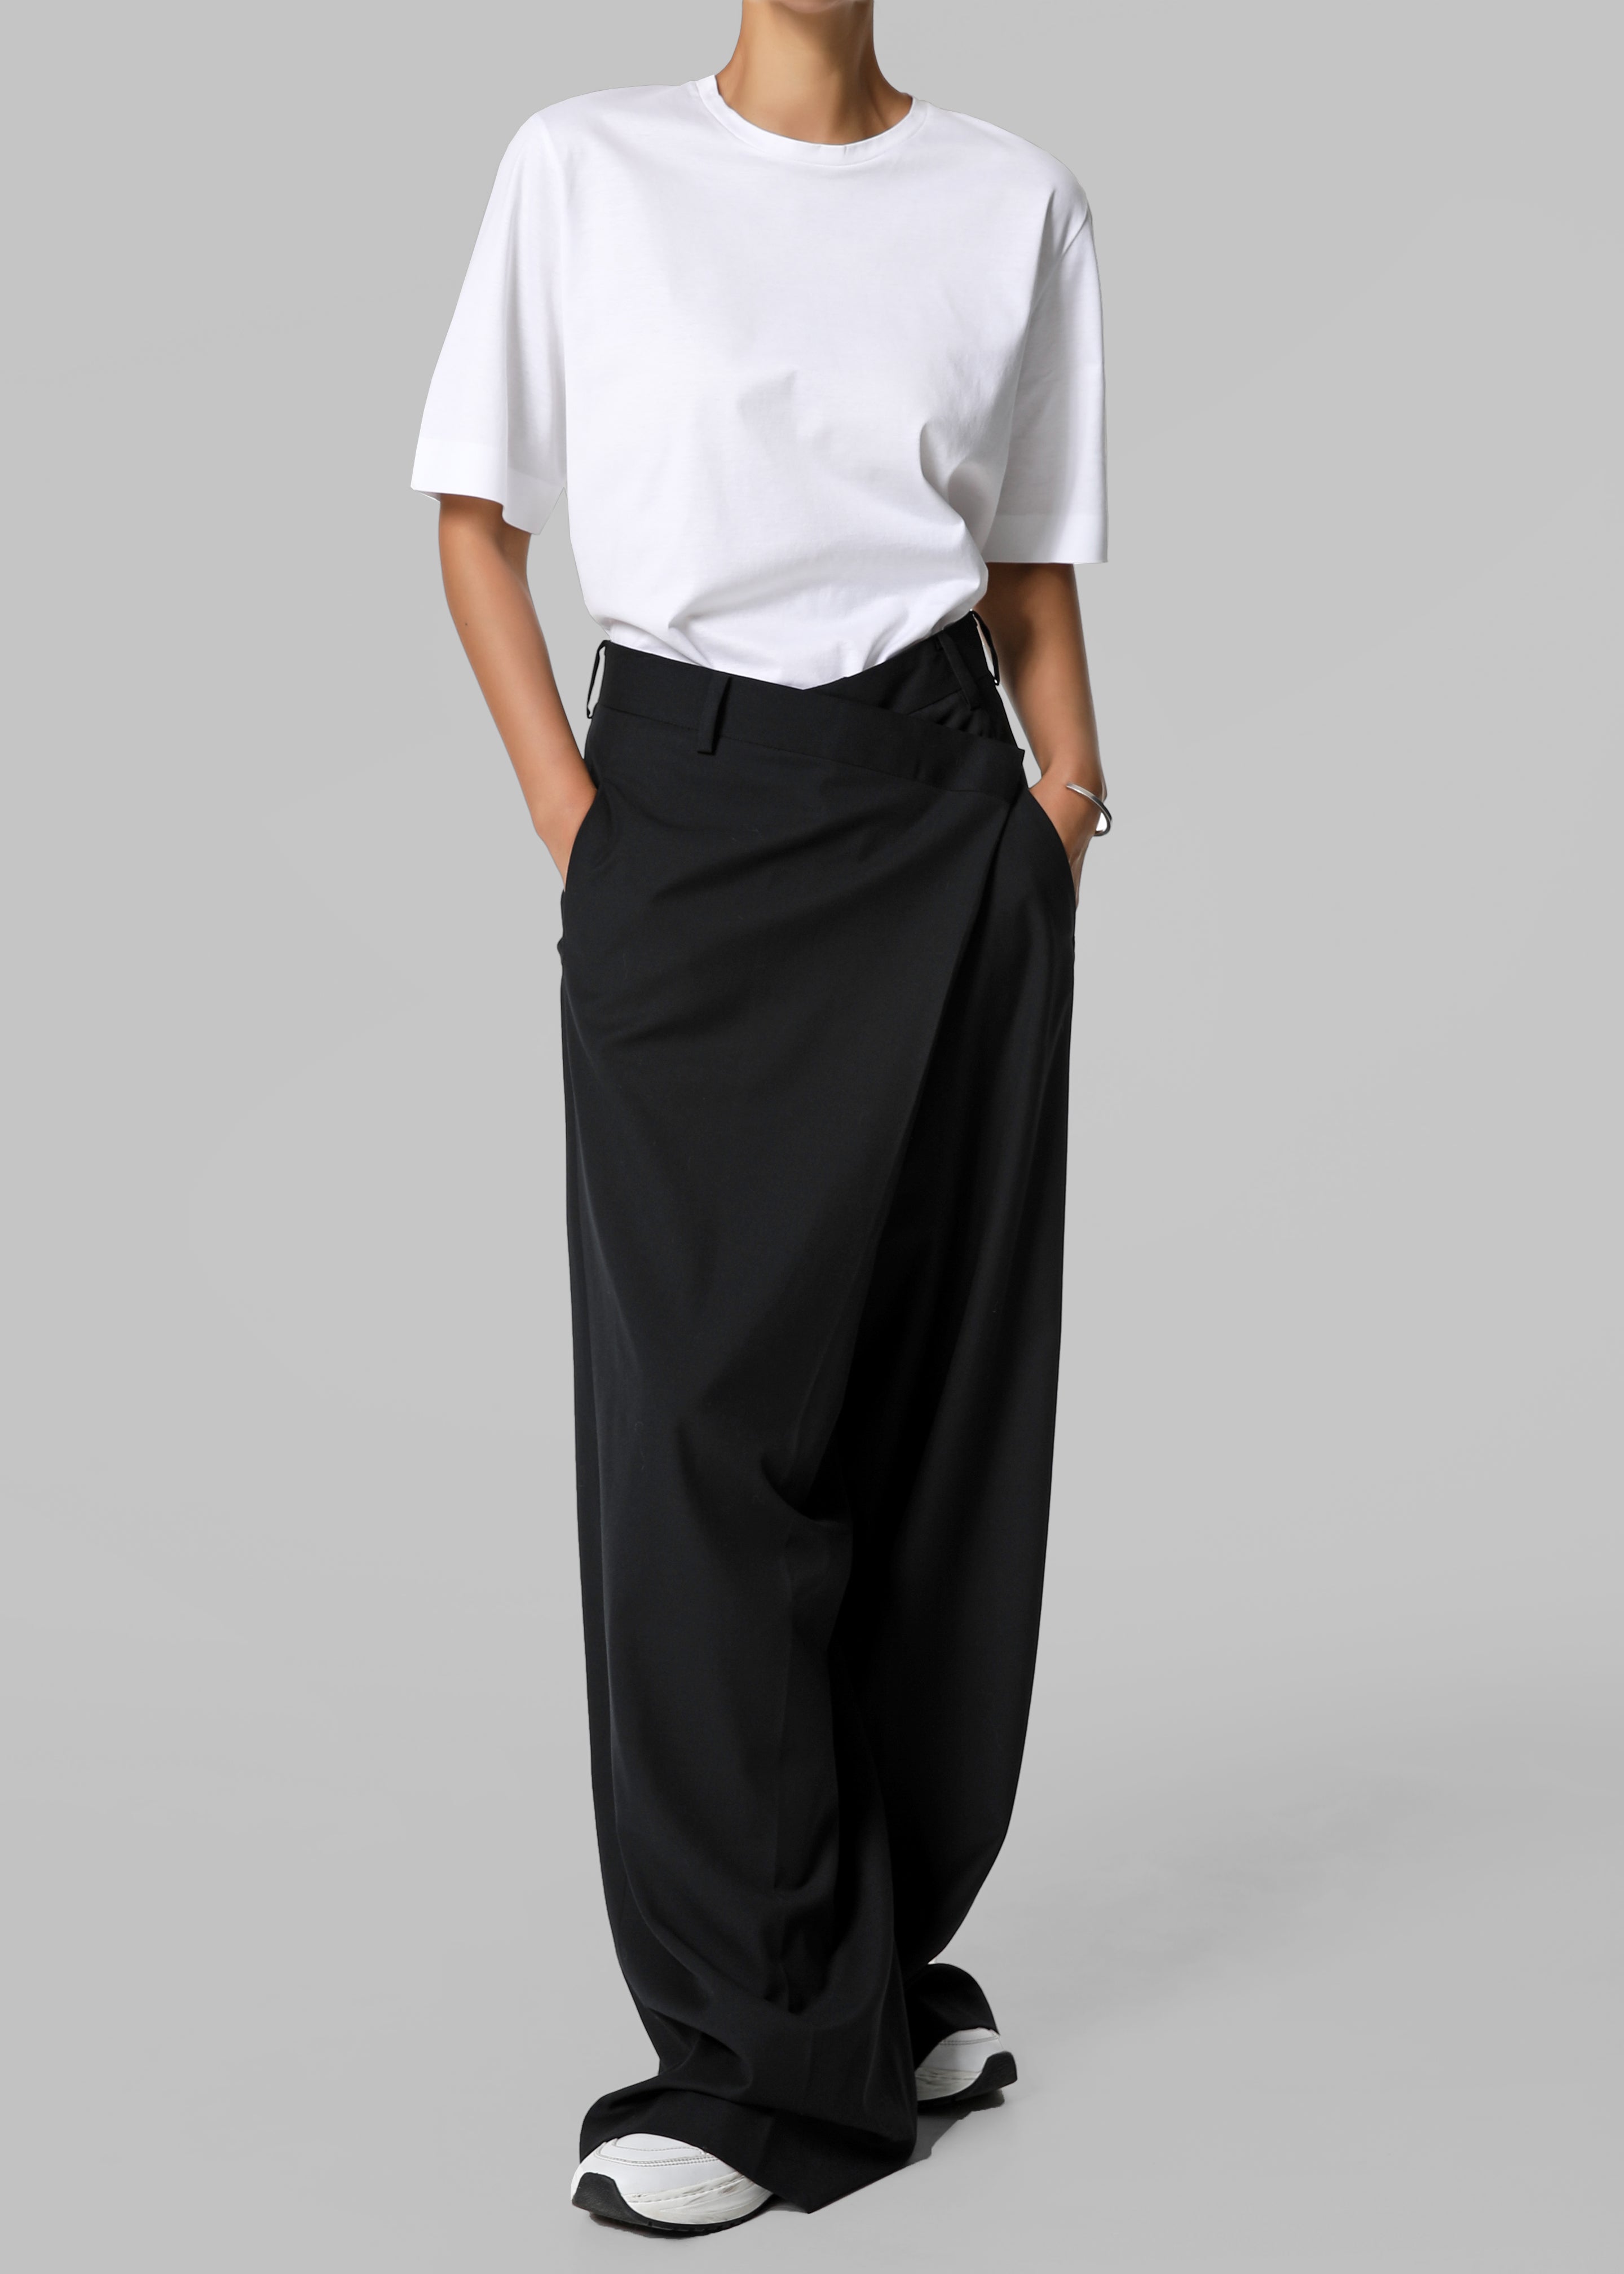 Marjorie Asymmetrical Trousers - Black - 6